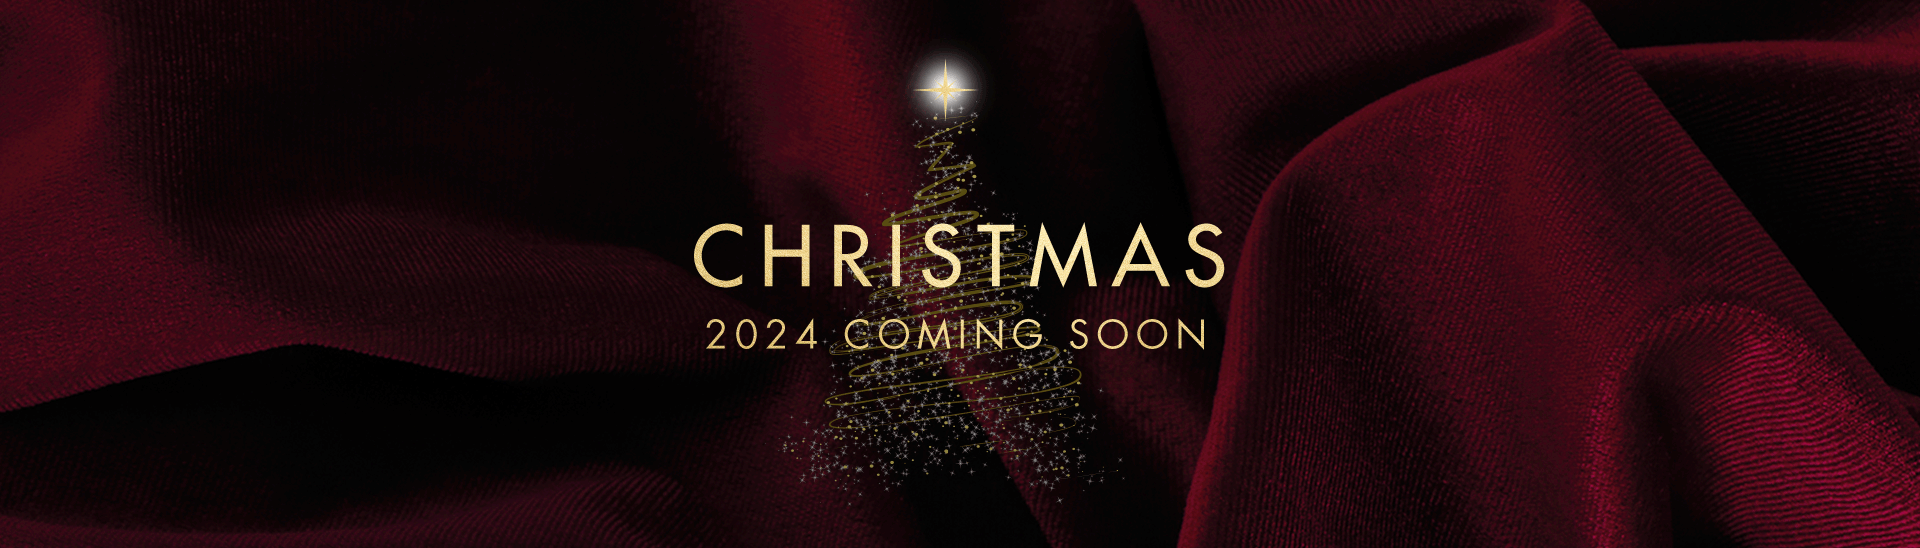 Christmas 2024 at Mitcham